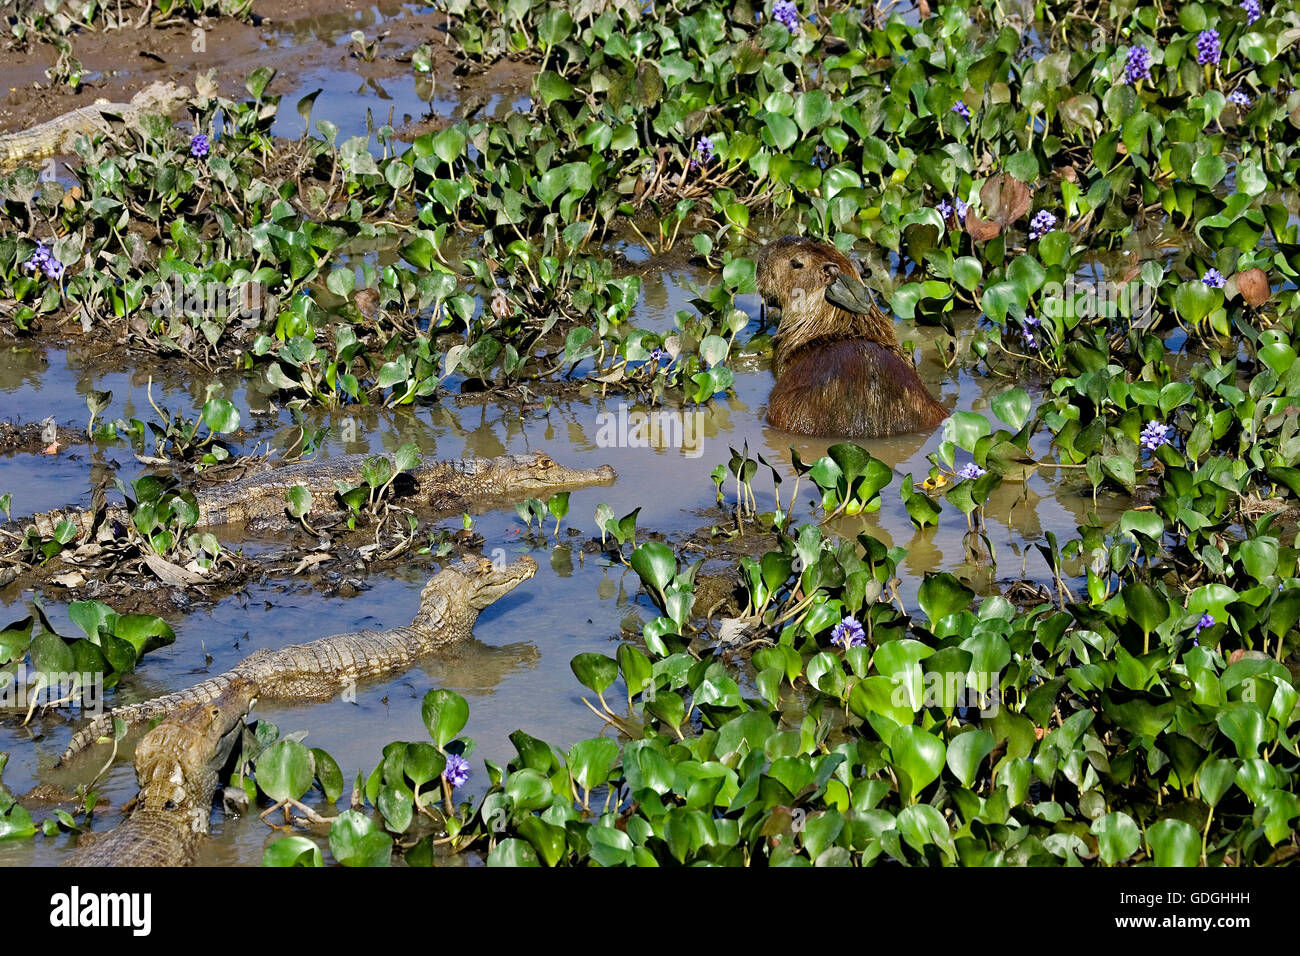 Brillentragende Brillenkaiman, Caiman Crocodilus und Capybara, Hydrochoerus Hydrochaeris, im Sumpf, Los Lianos in Venezuela Stockfoto